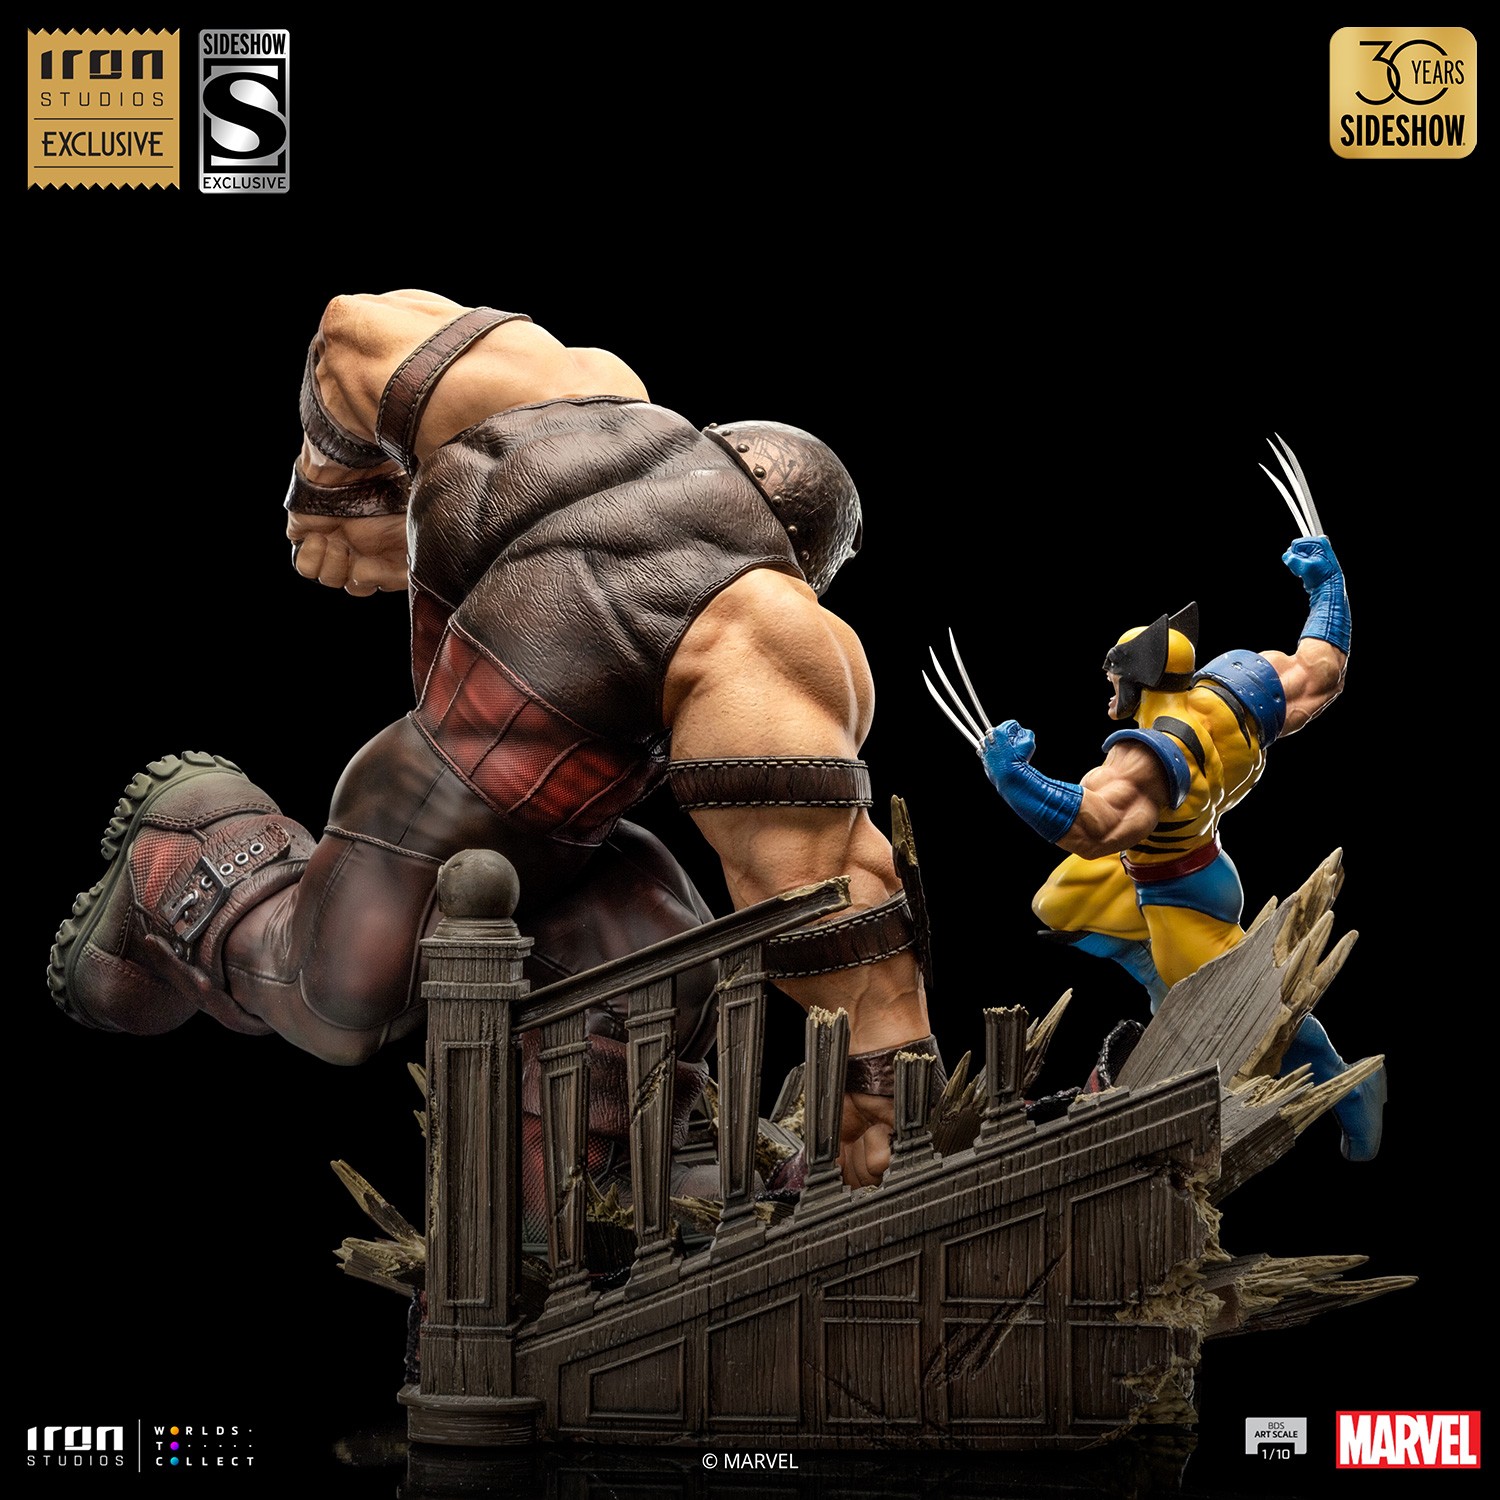 Wolverine vs Juggernaut Exclusive Edition (Prototype Shown) View 8